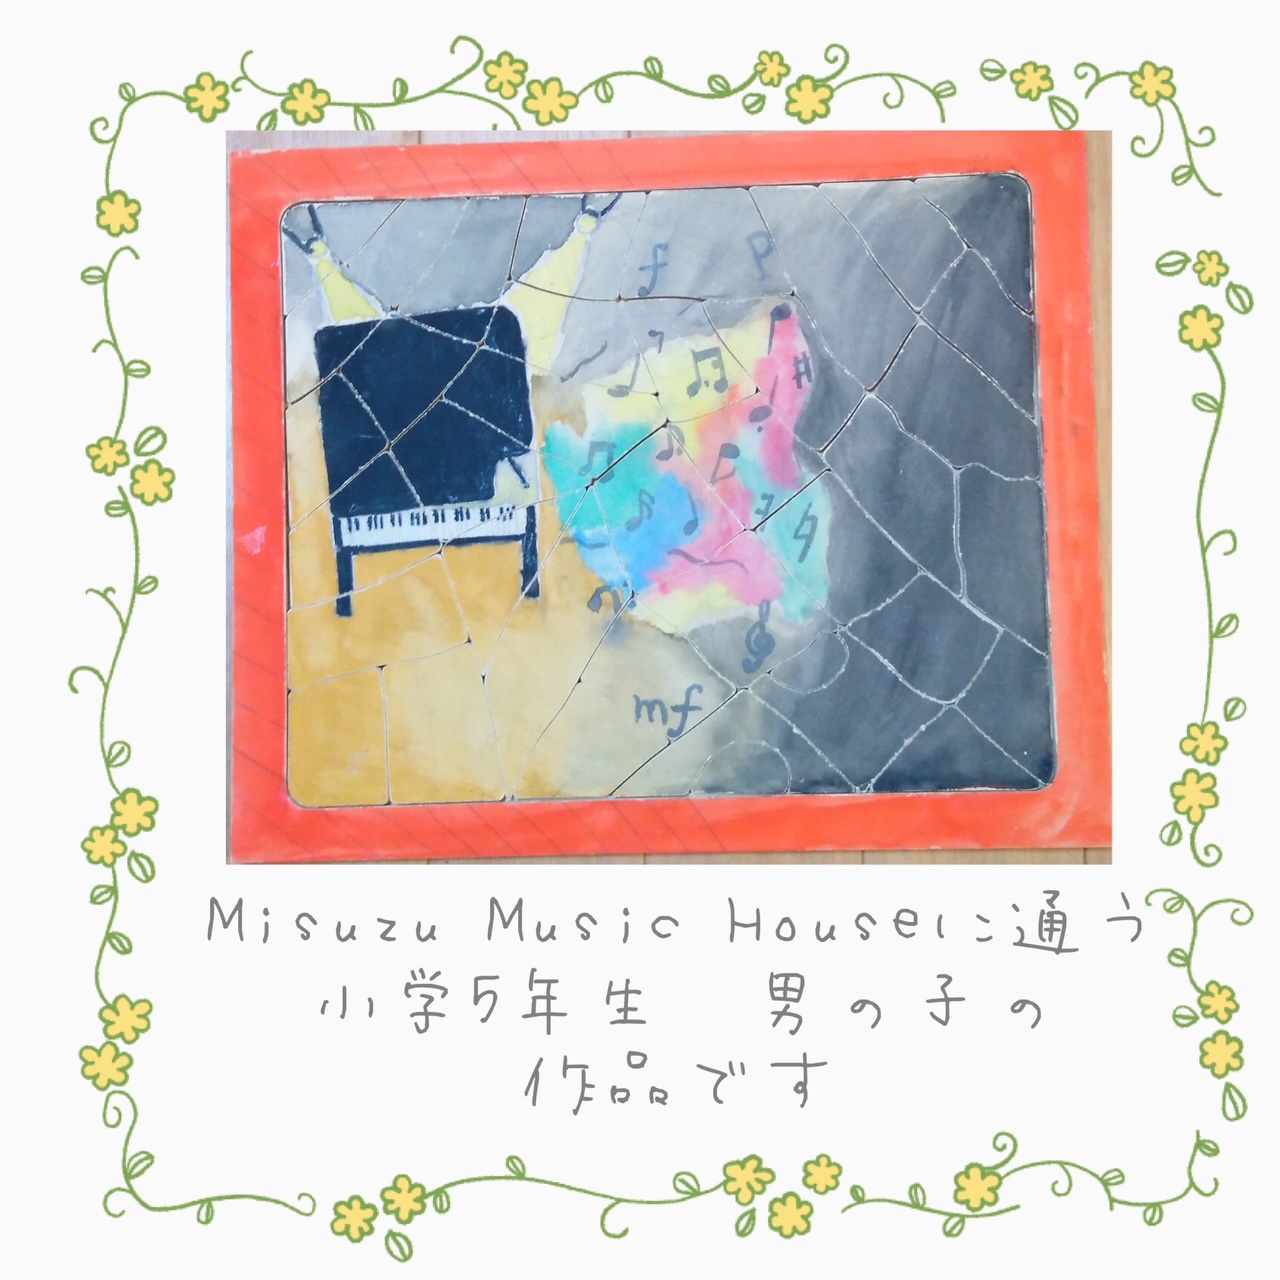 image110.jpeg alt="Misuzu Music Houseにお通いの男の子の作品です"